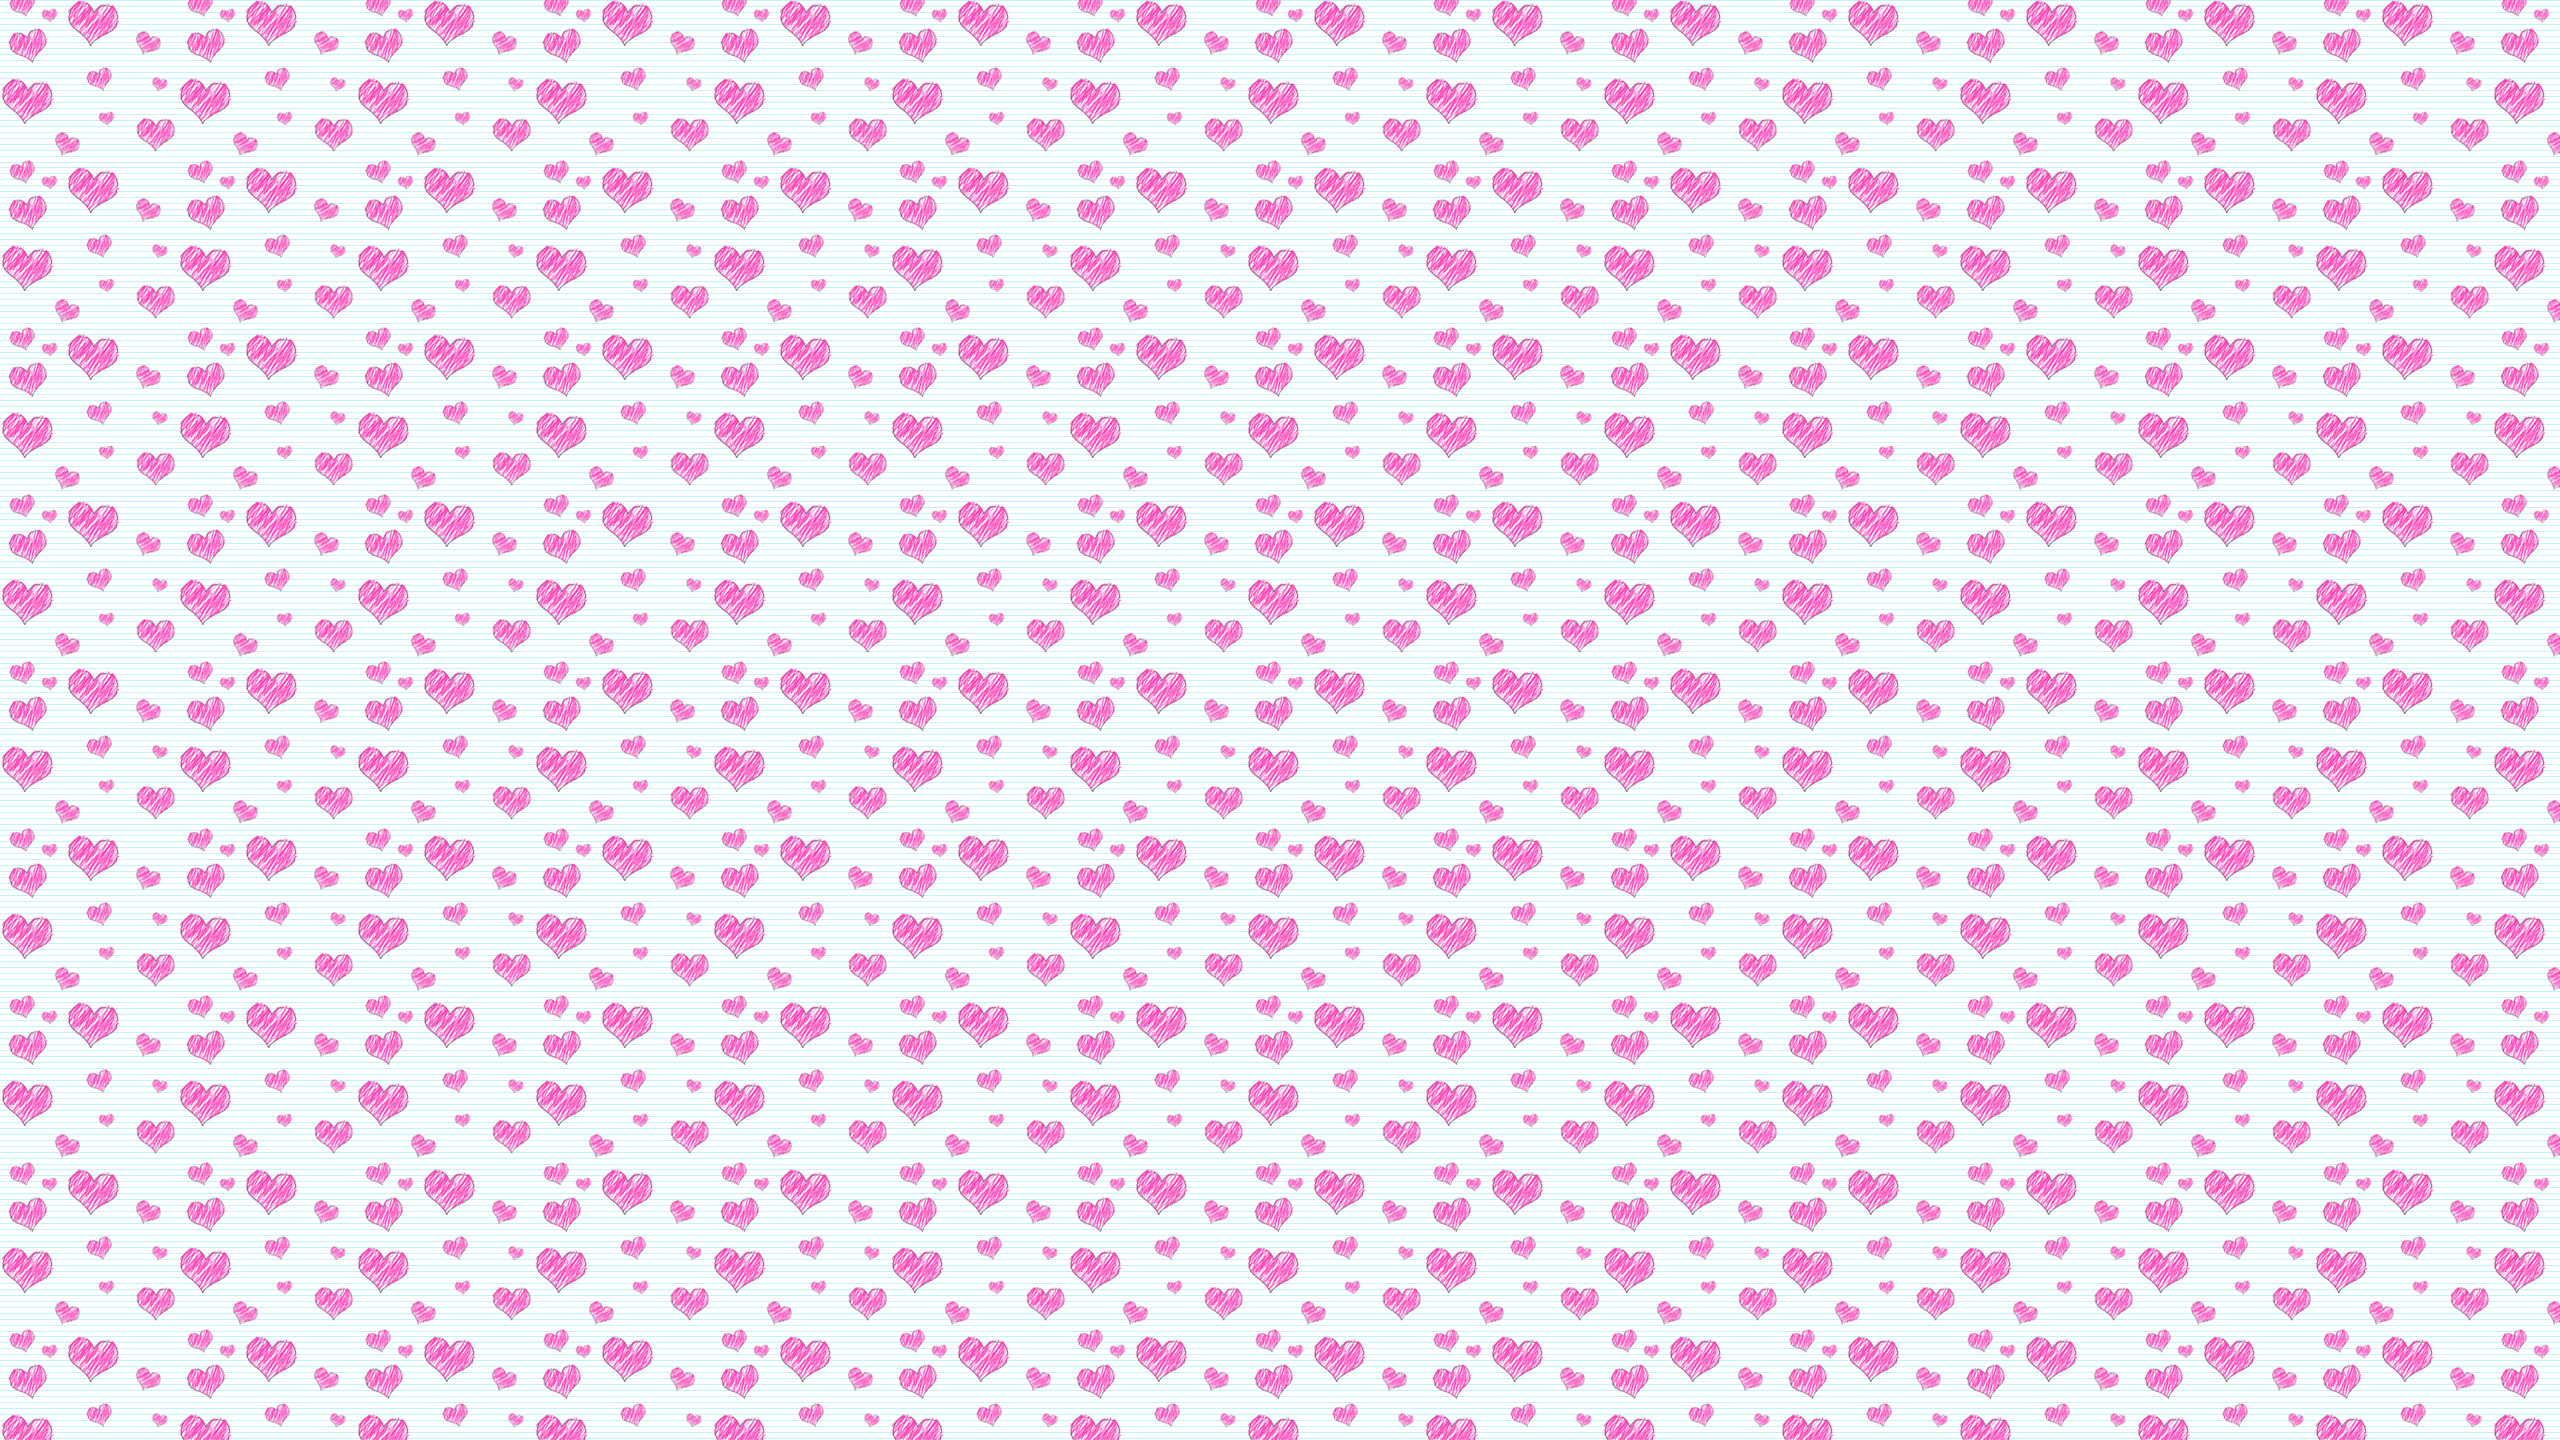 2560x1440 wallpaper pink heart pattern (2560Ã1440)